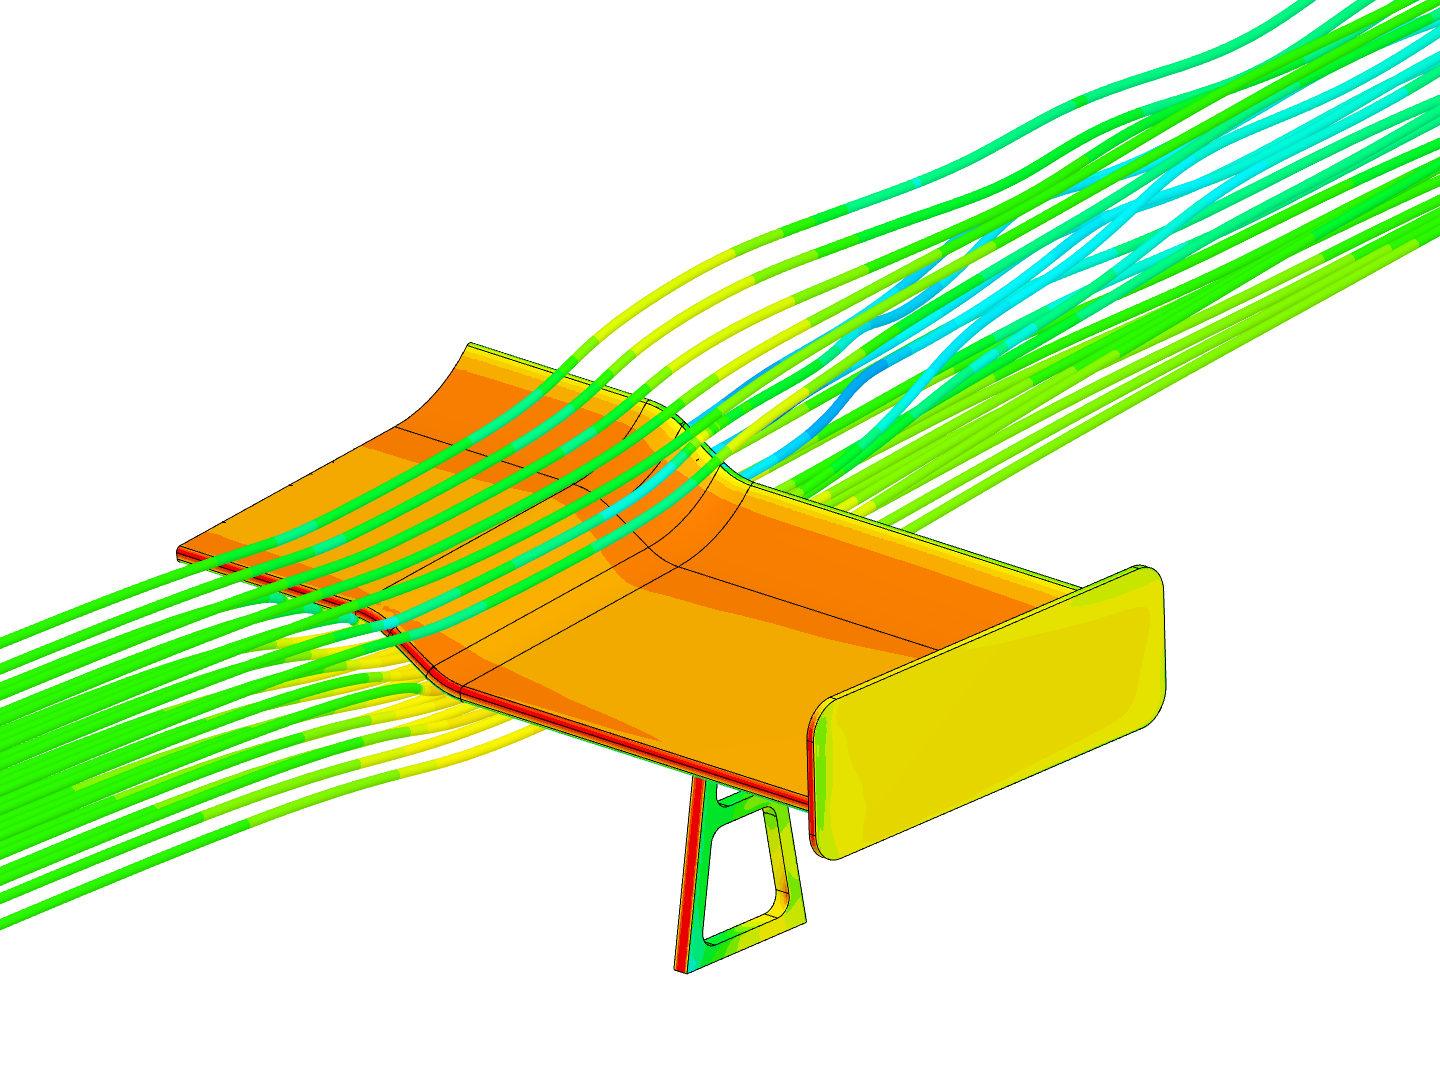 Airflow Simulation Around a GT car spoiler image